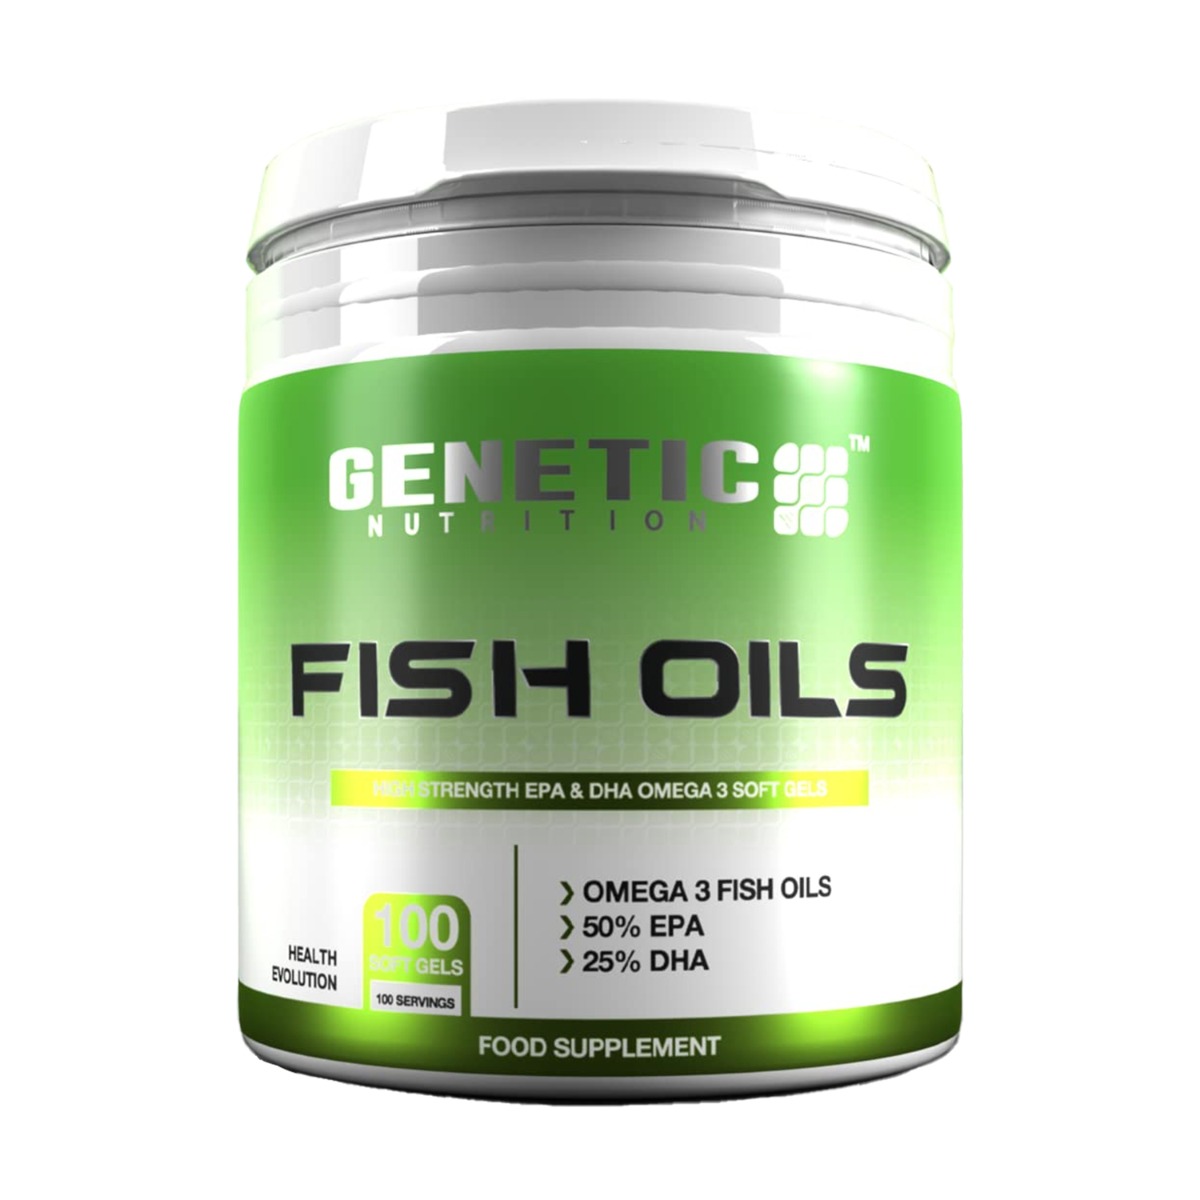 Genetic Nutrition Fish Oil, 100Tablets